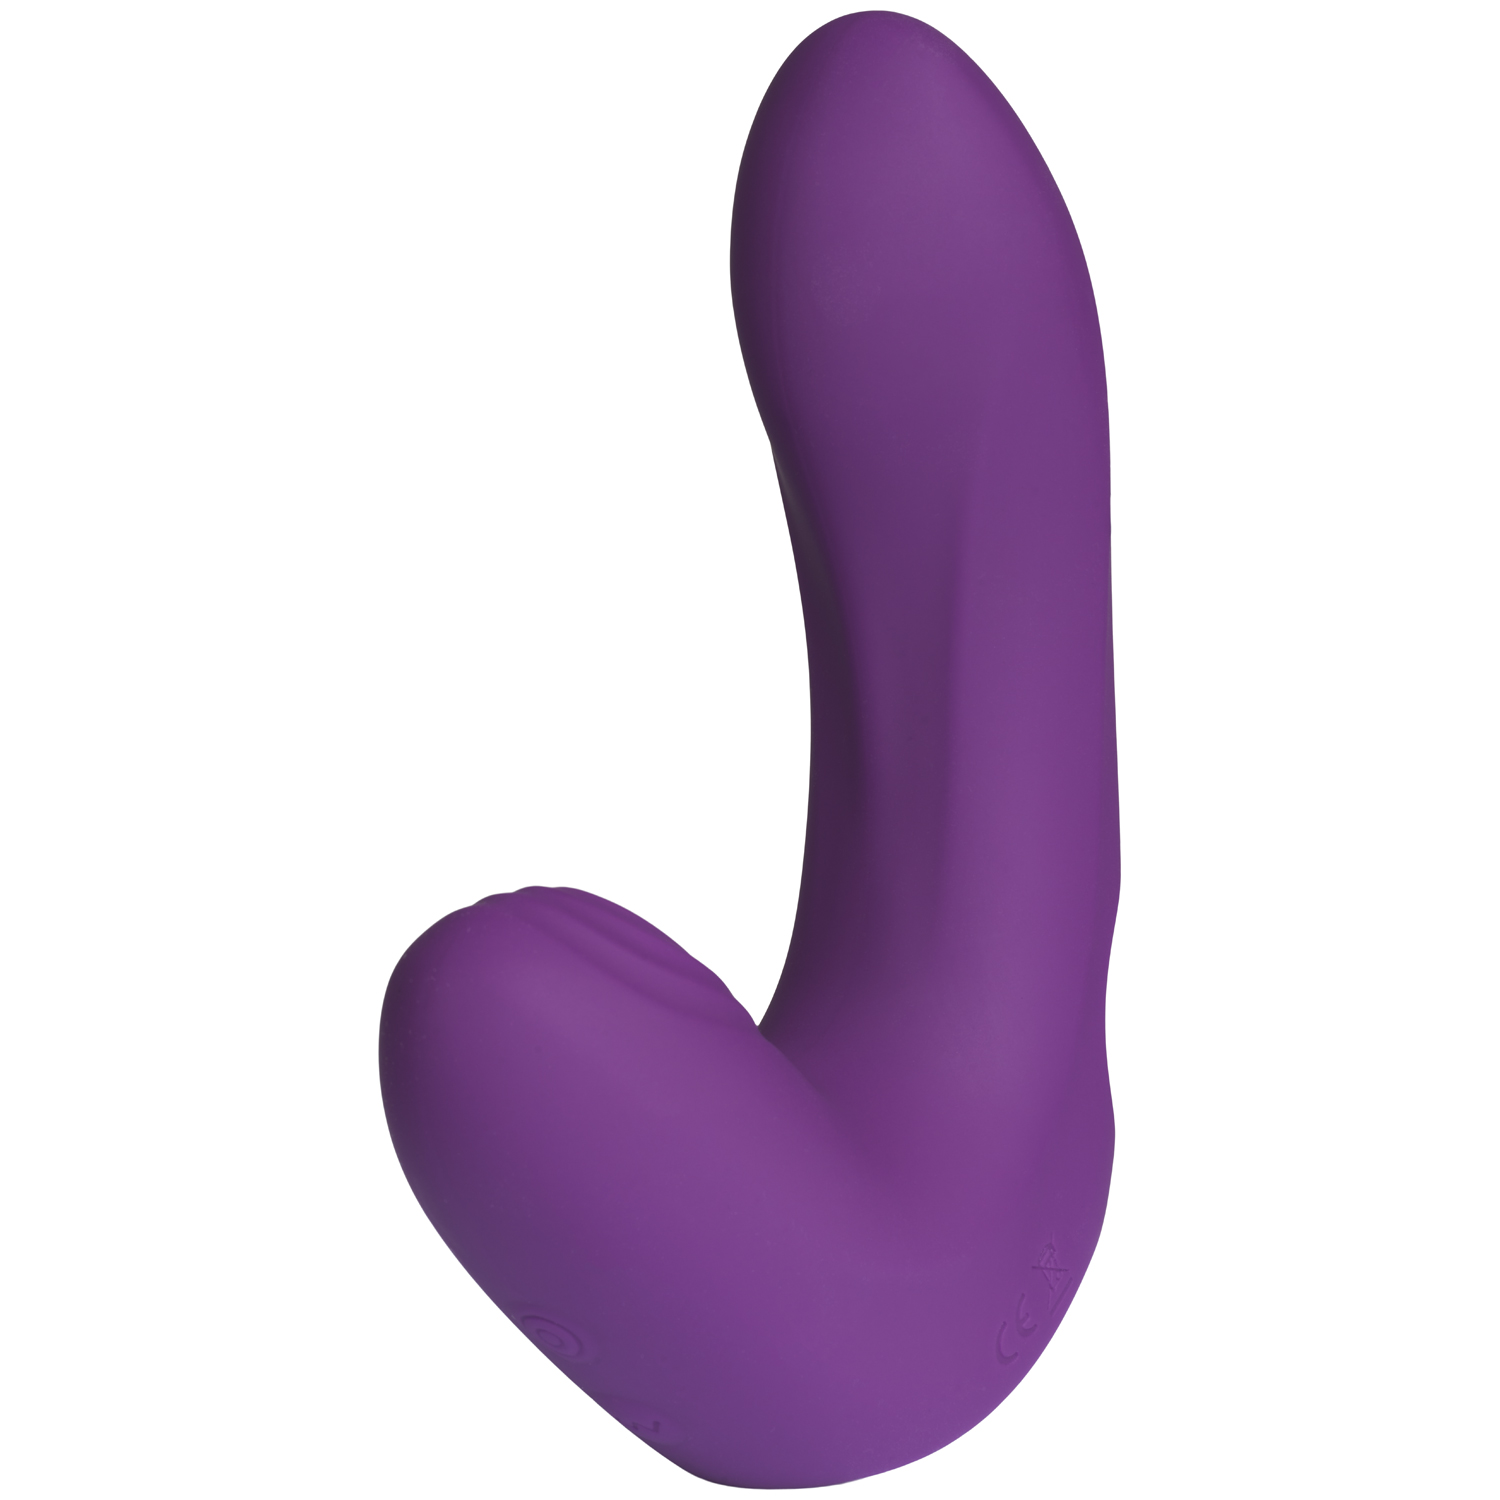 Inmi Finger-Pulse Finger Vibrator - Purple